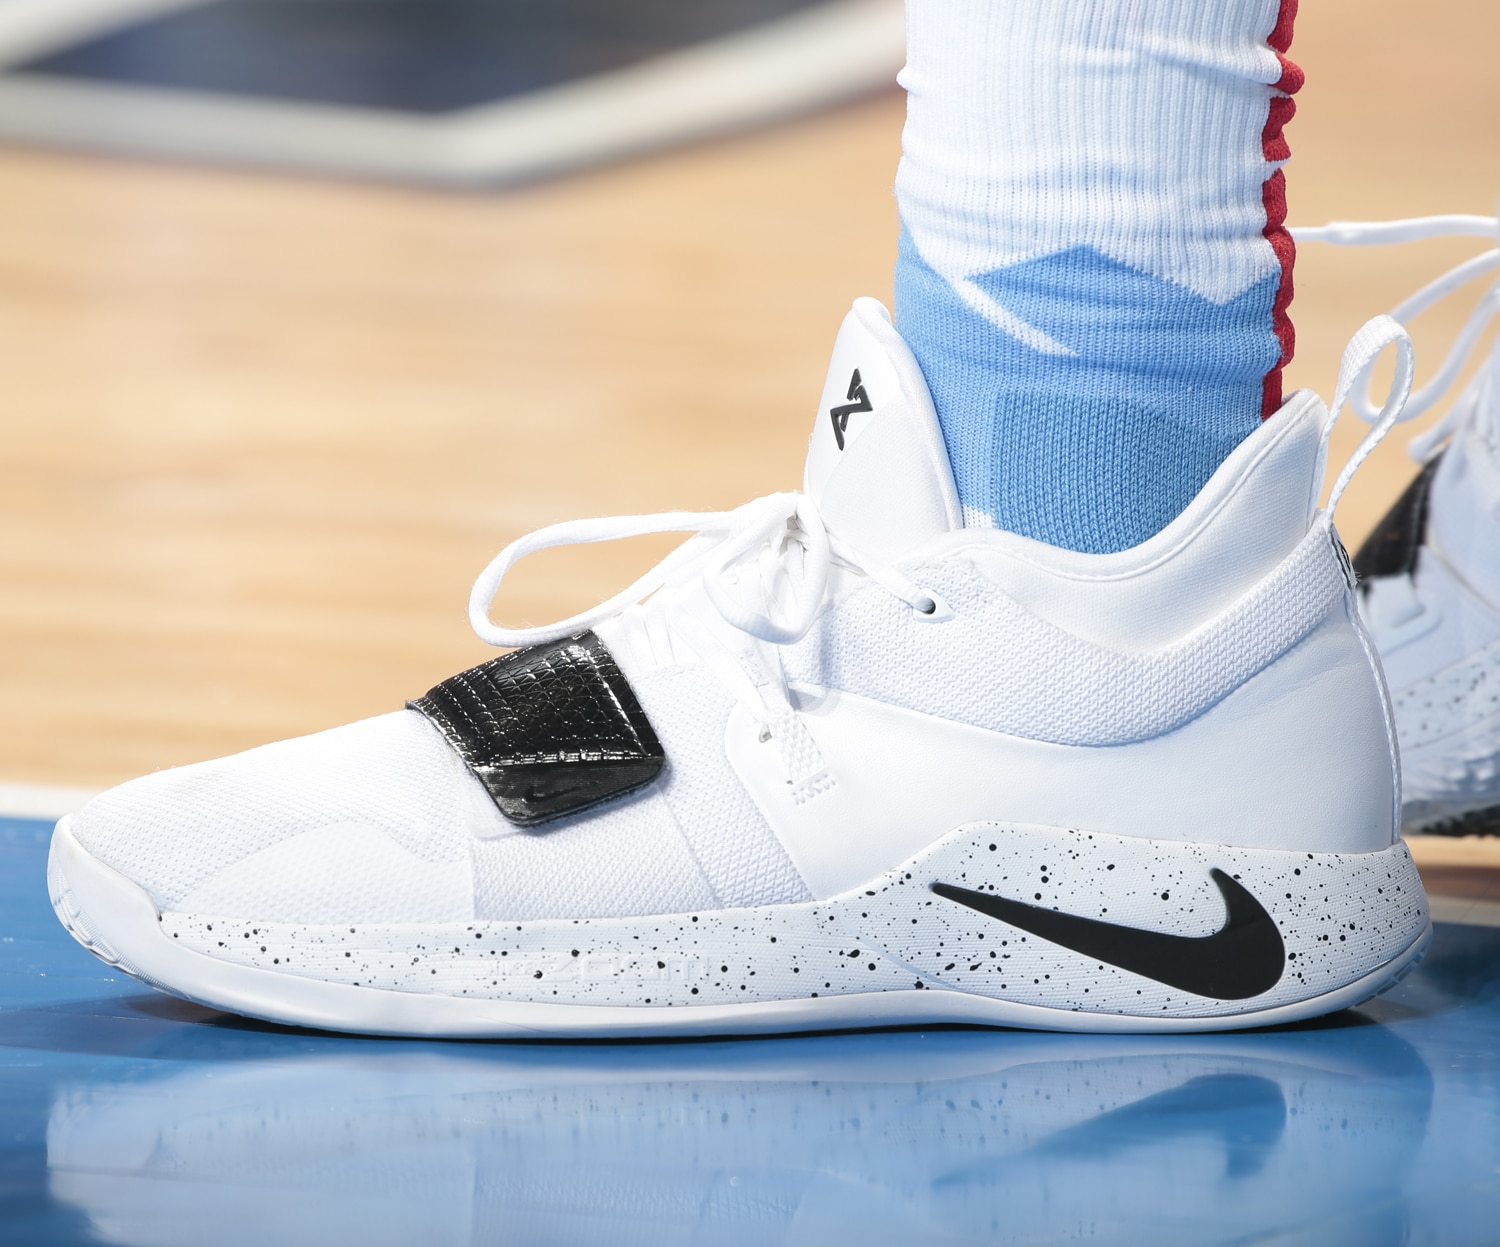 NBA's Luka Doncic wearing some Gohan sneakers tonight : r/dbz